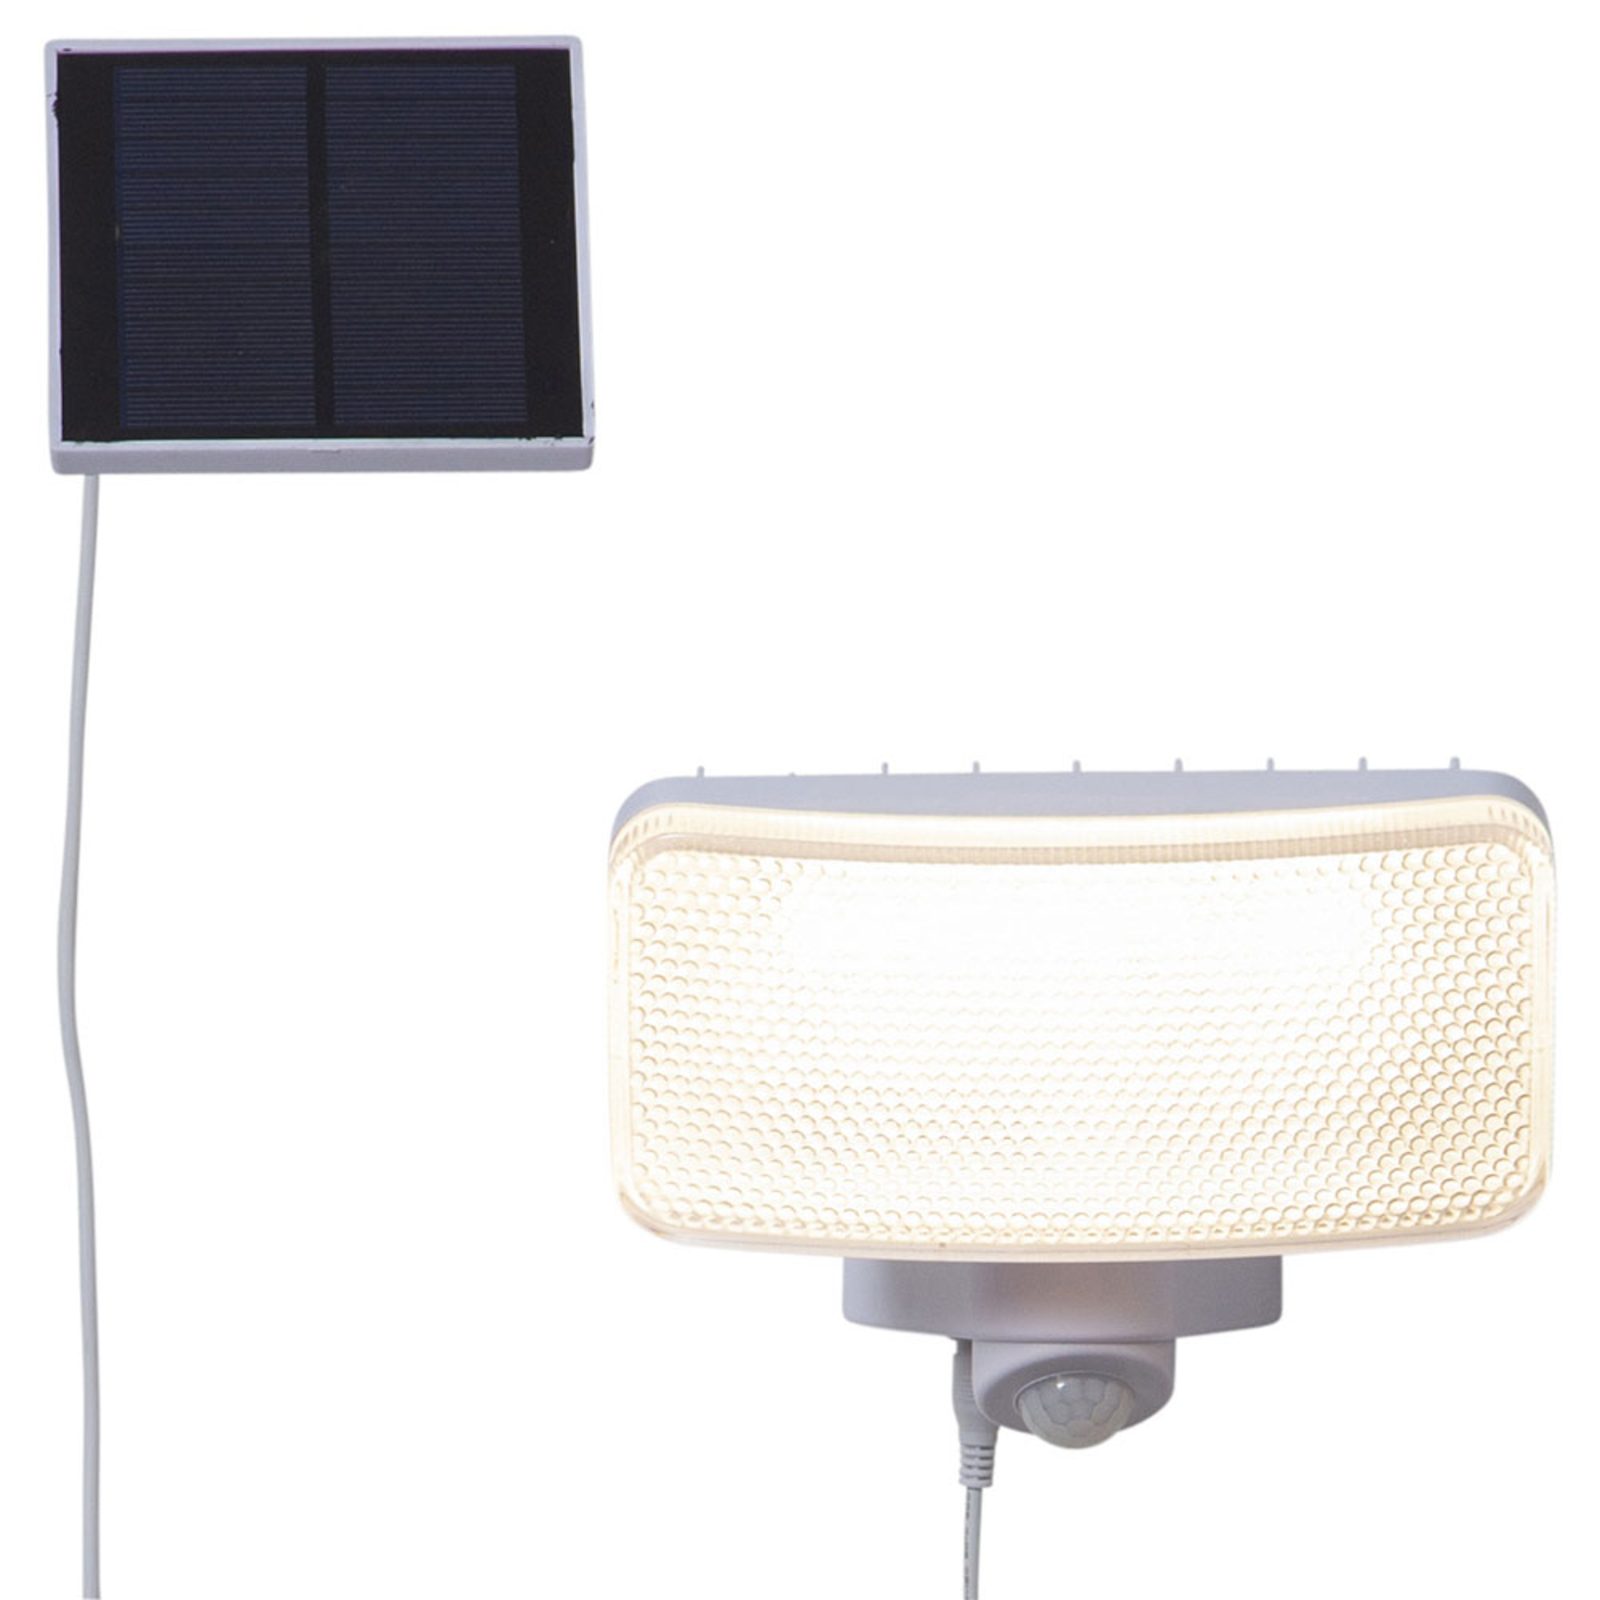 LED lampa Powerspot Sensor, hranatá biela 350lm